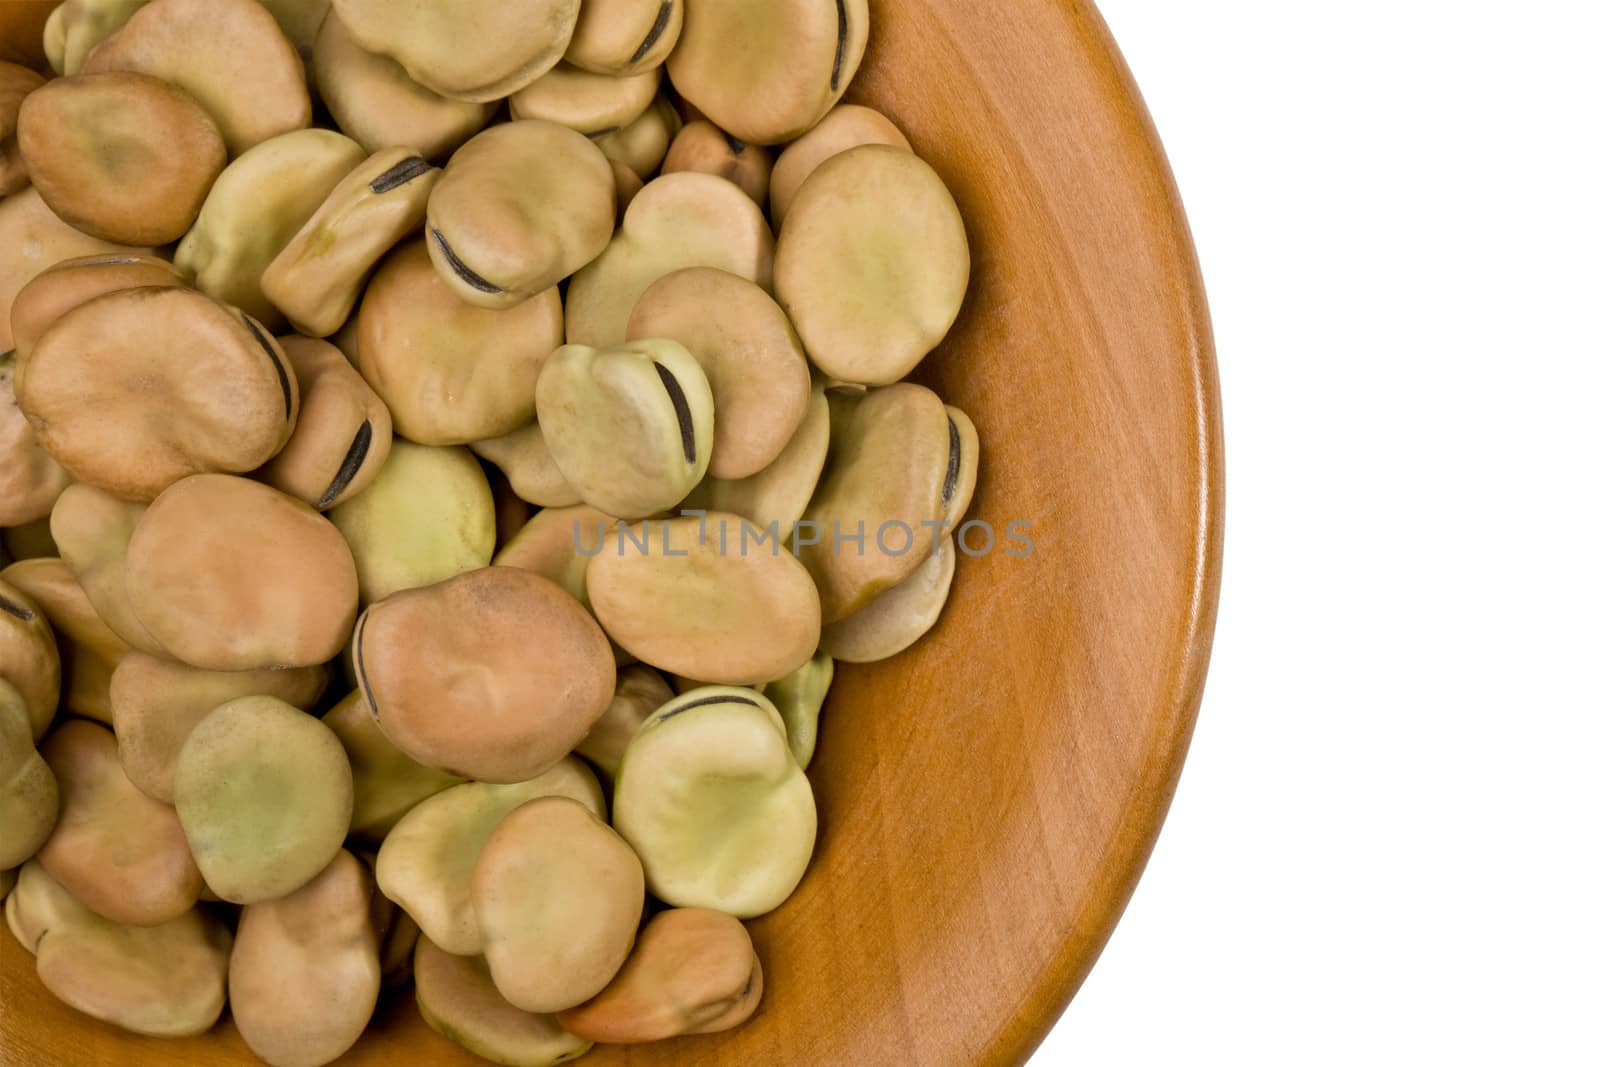 beans on plate by kornienko